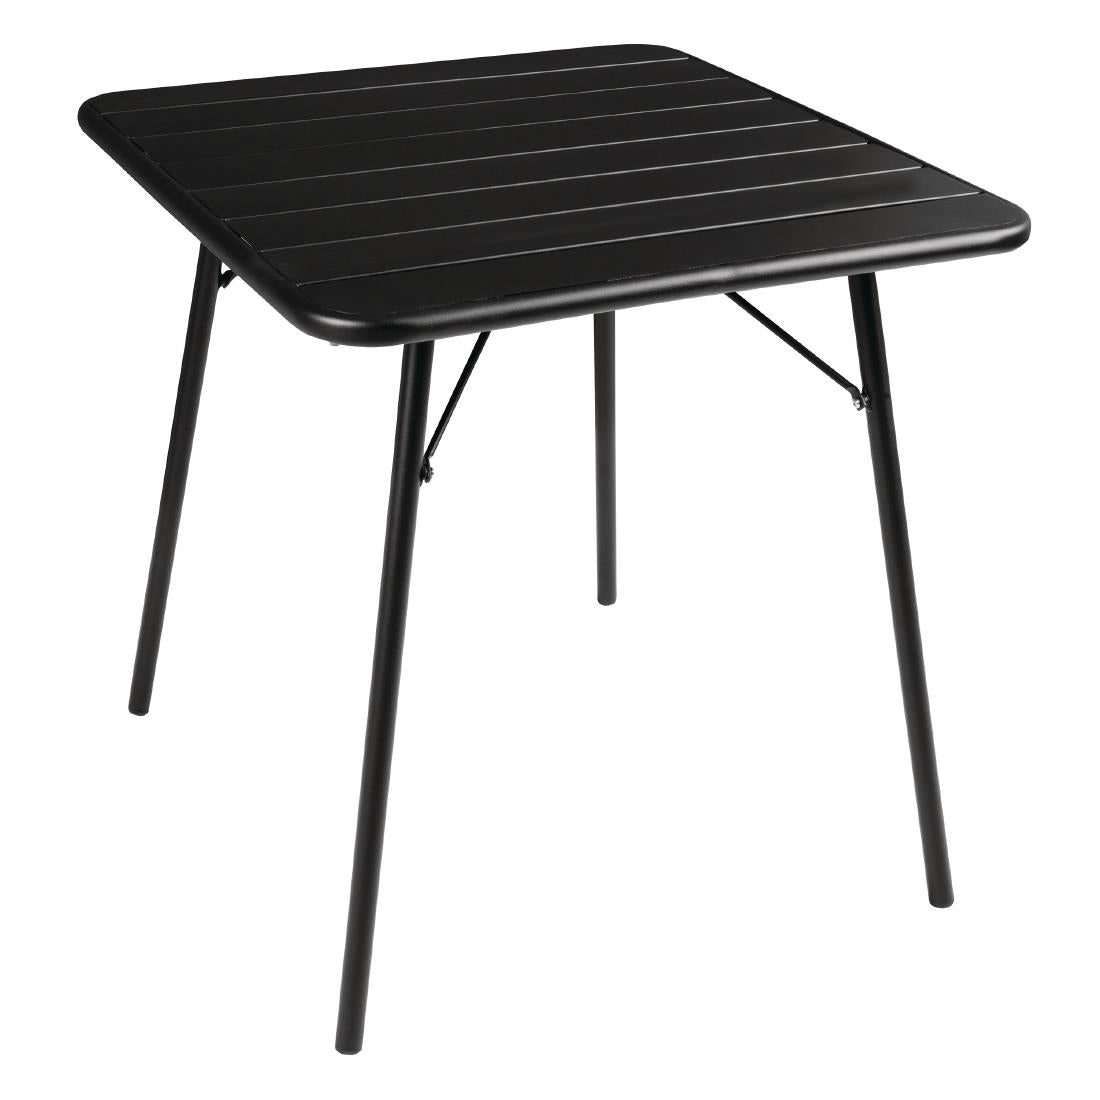 CS731 Bolero Square Slatted Steel Table Black 700mm JD Catering Equipment Solutions Ltd